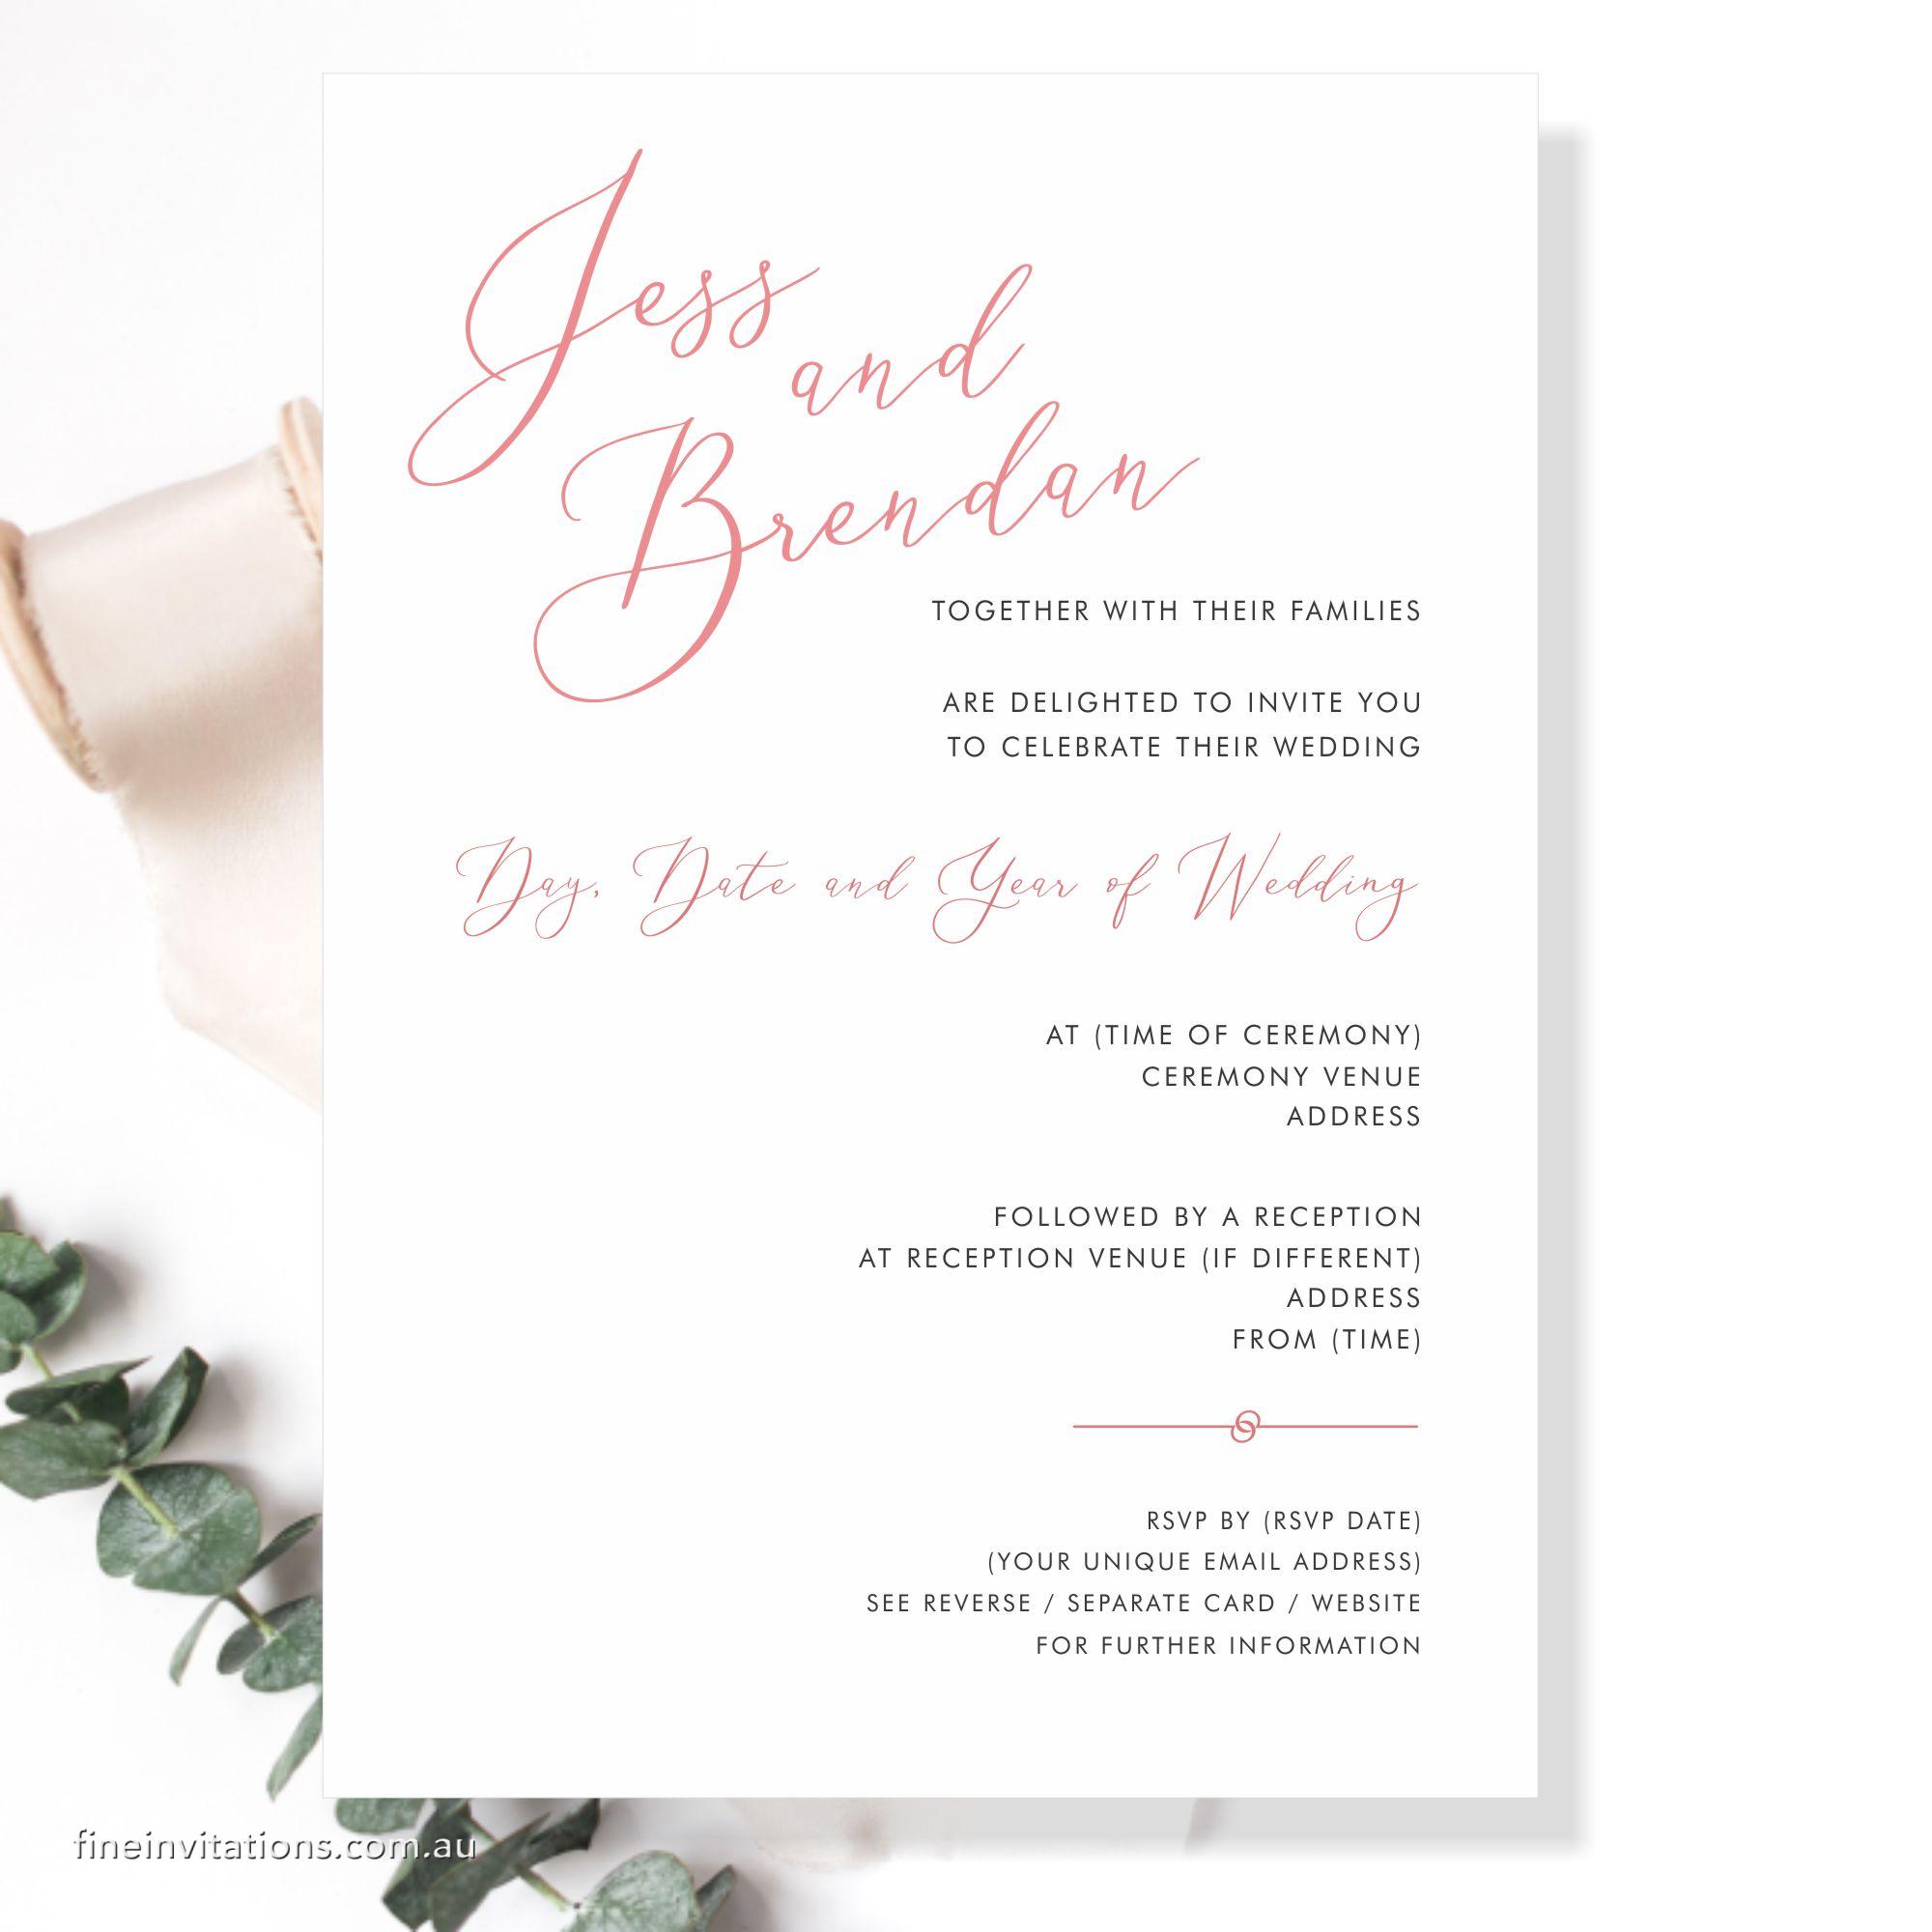 Sydney wedding invitations